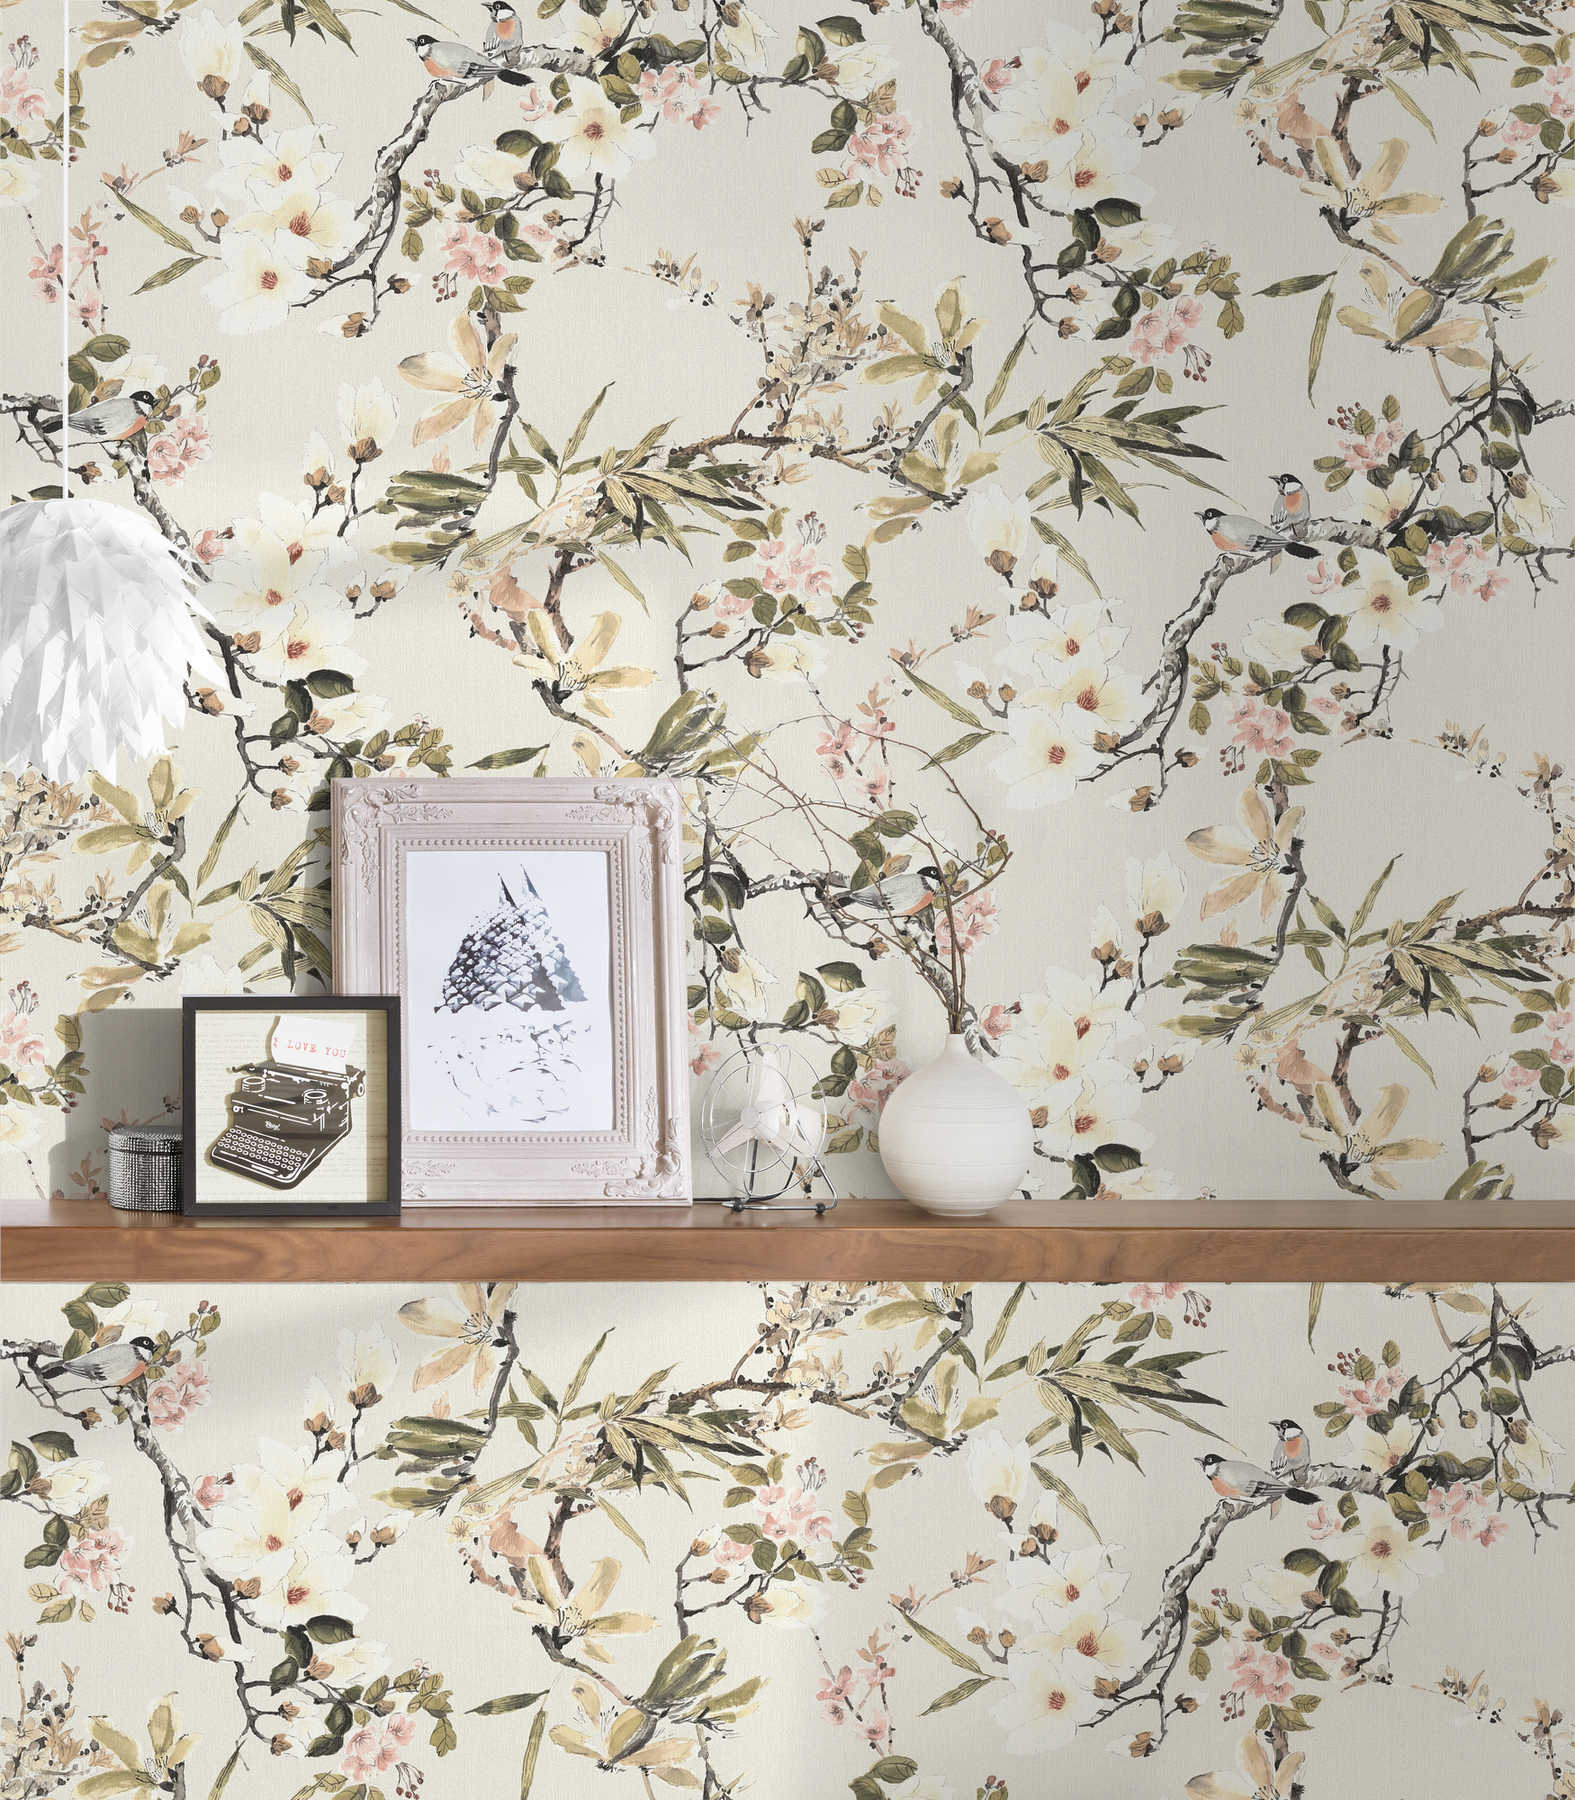             Non-woven wallpaper nature design flowers branches & birds - beige, colourful
        